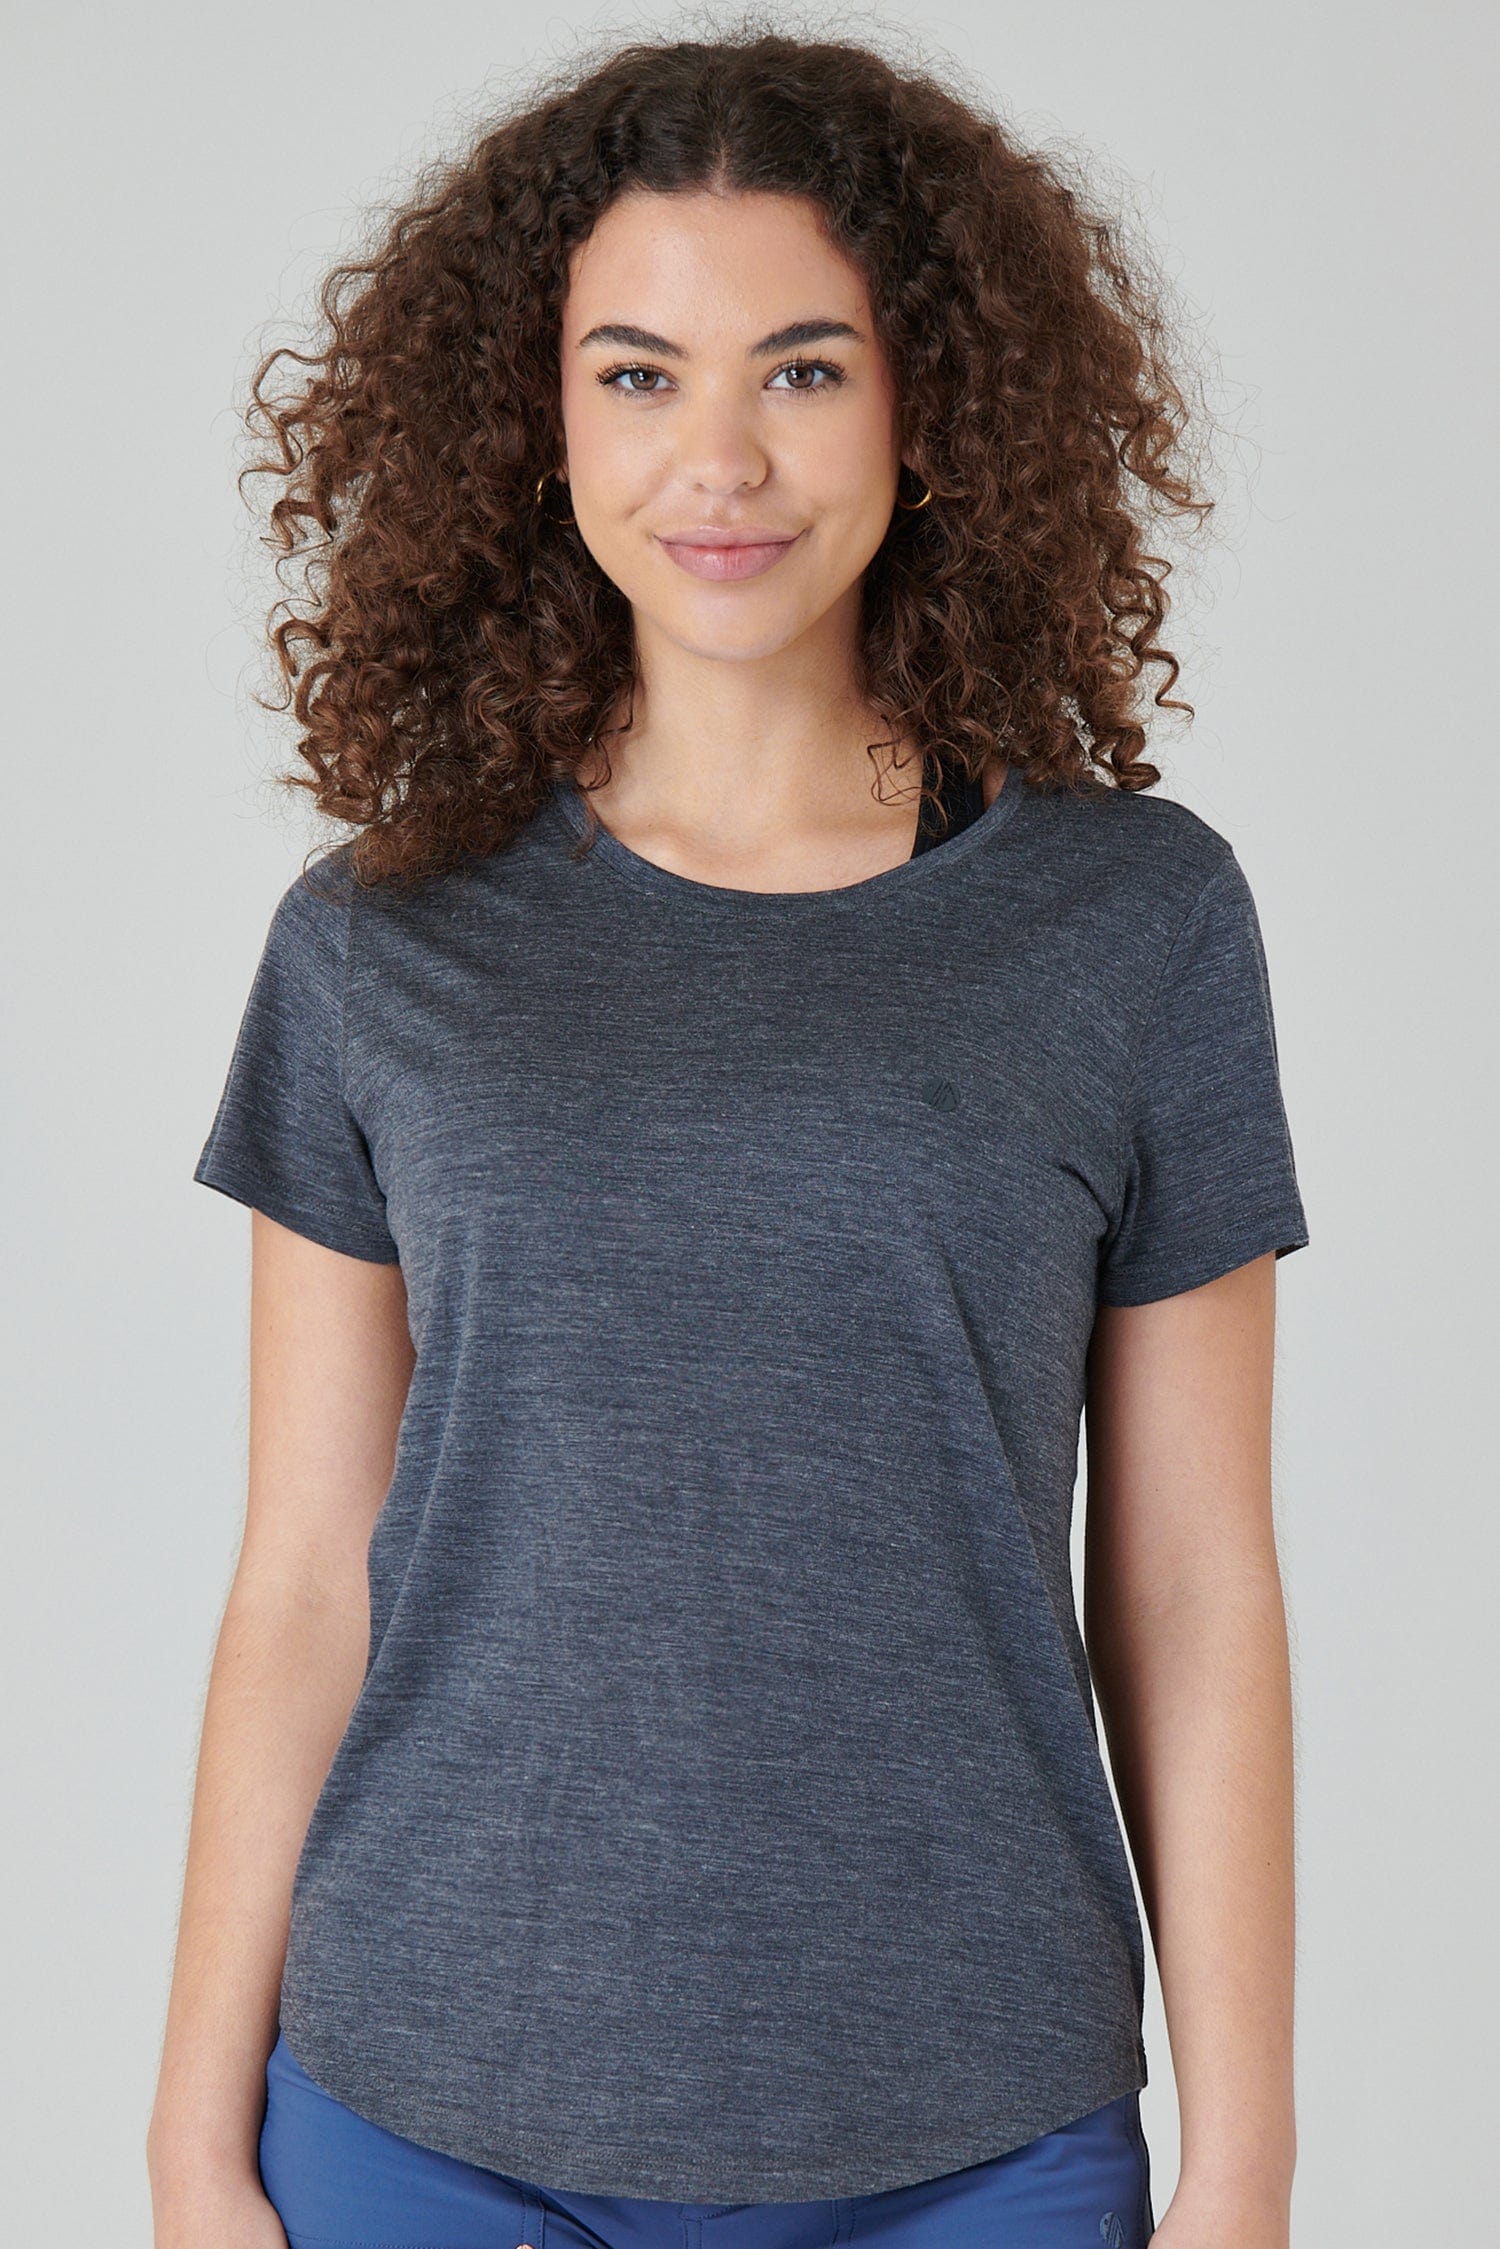 Merino Wool Crew Neck T-shirt - Charcoal - Large / Uk14 - Womens - Acai Outdoorwear